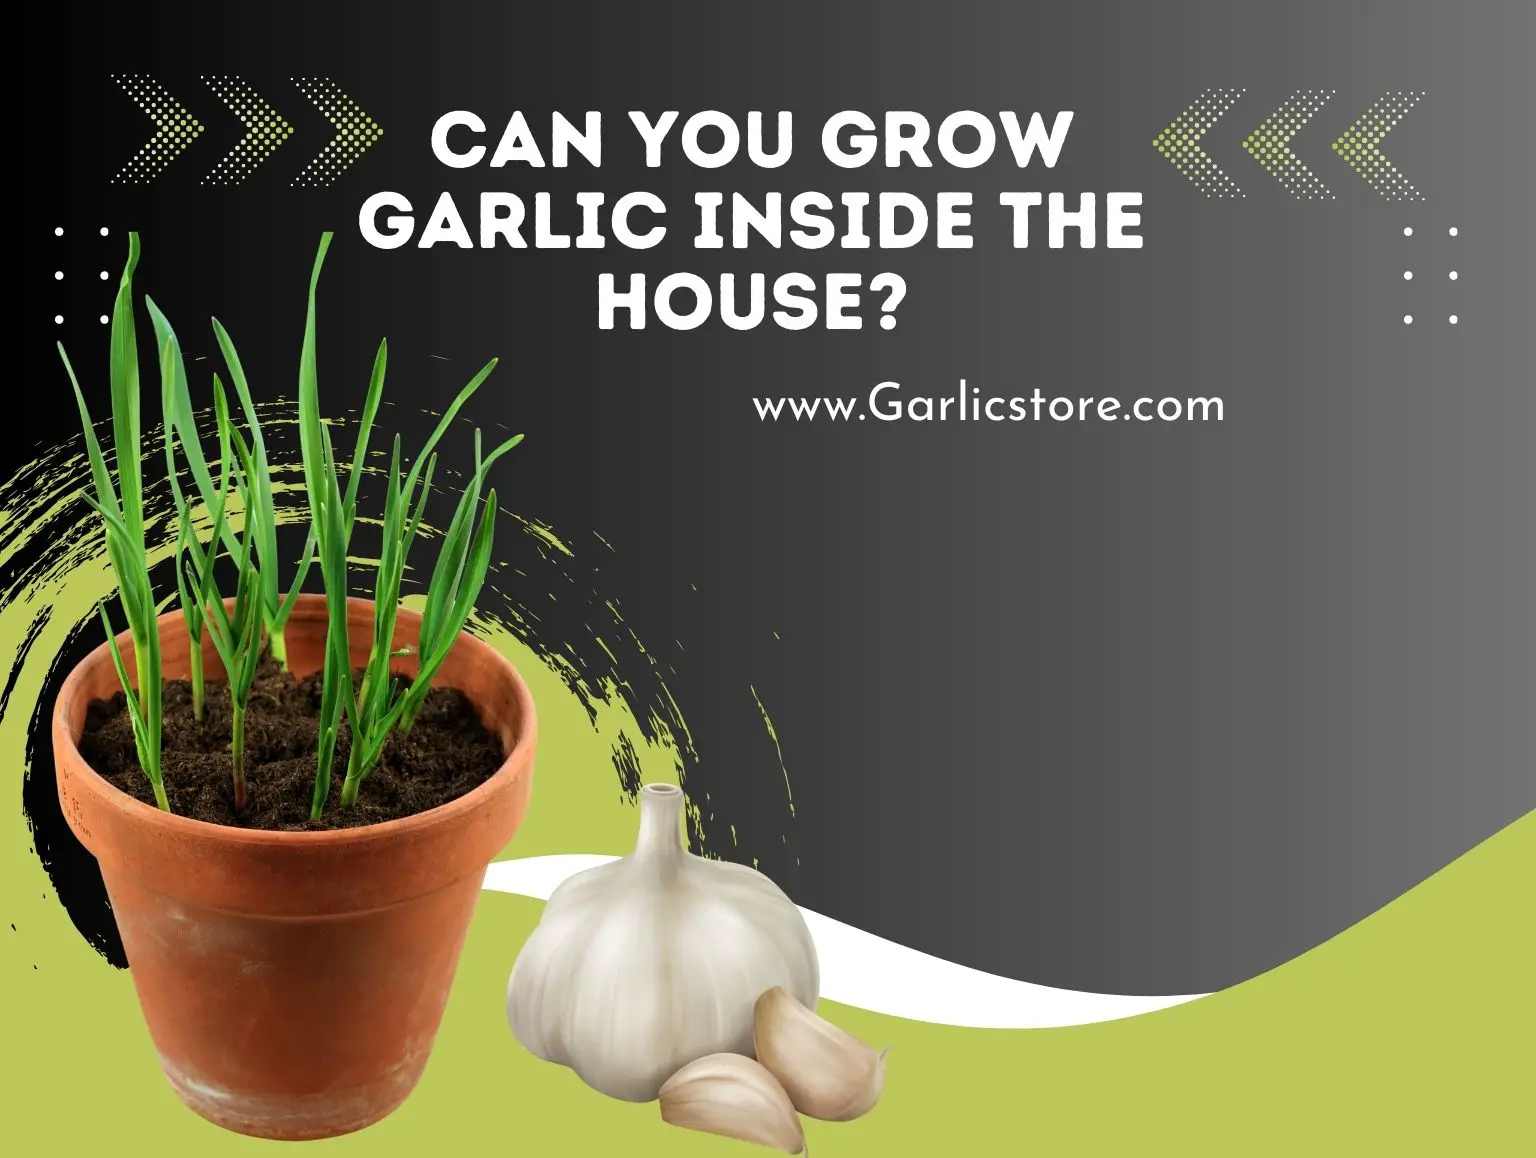 Can You Grow Garlic Inside the House?